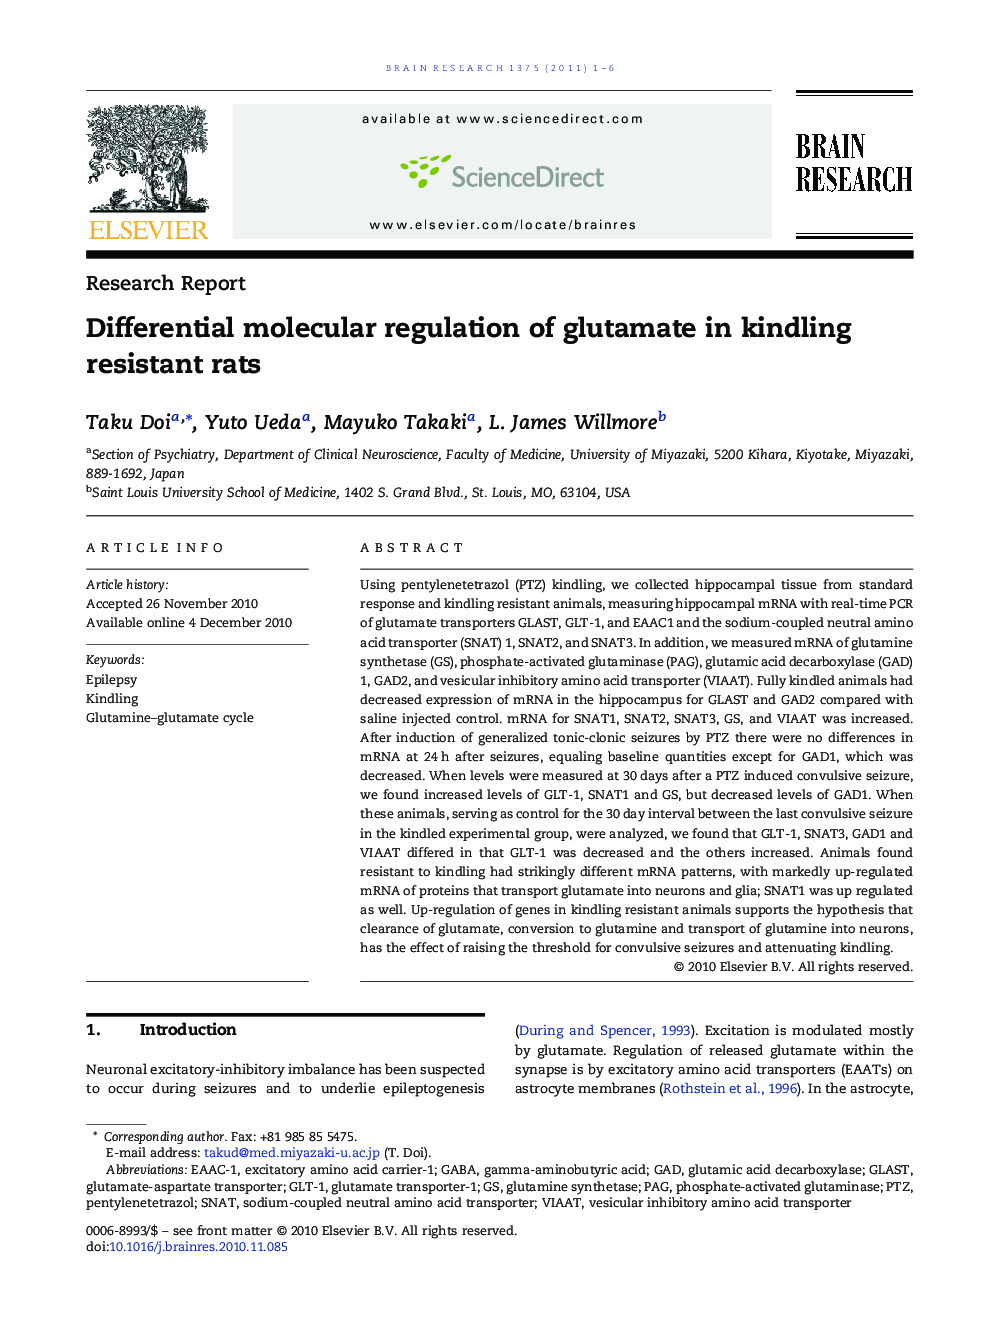 Differential molecular regulation of glutamate in kindling resistant rats